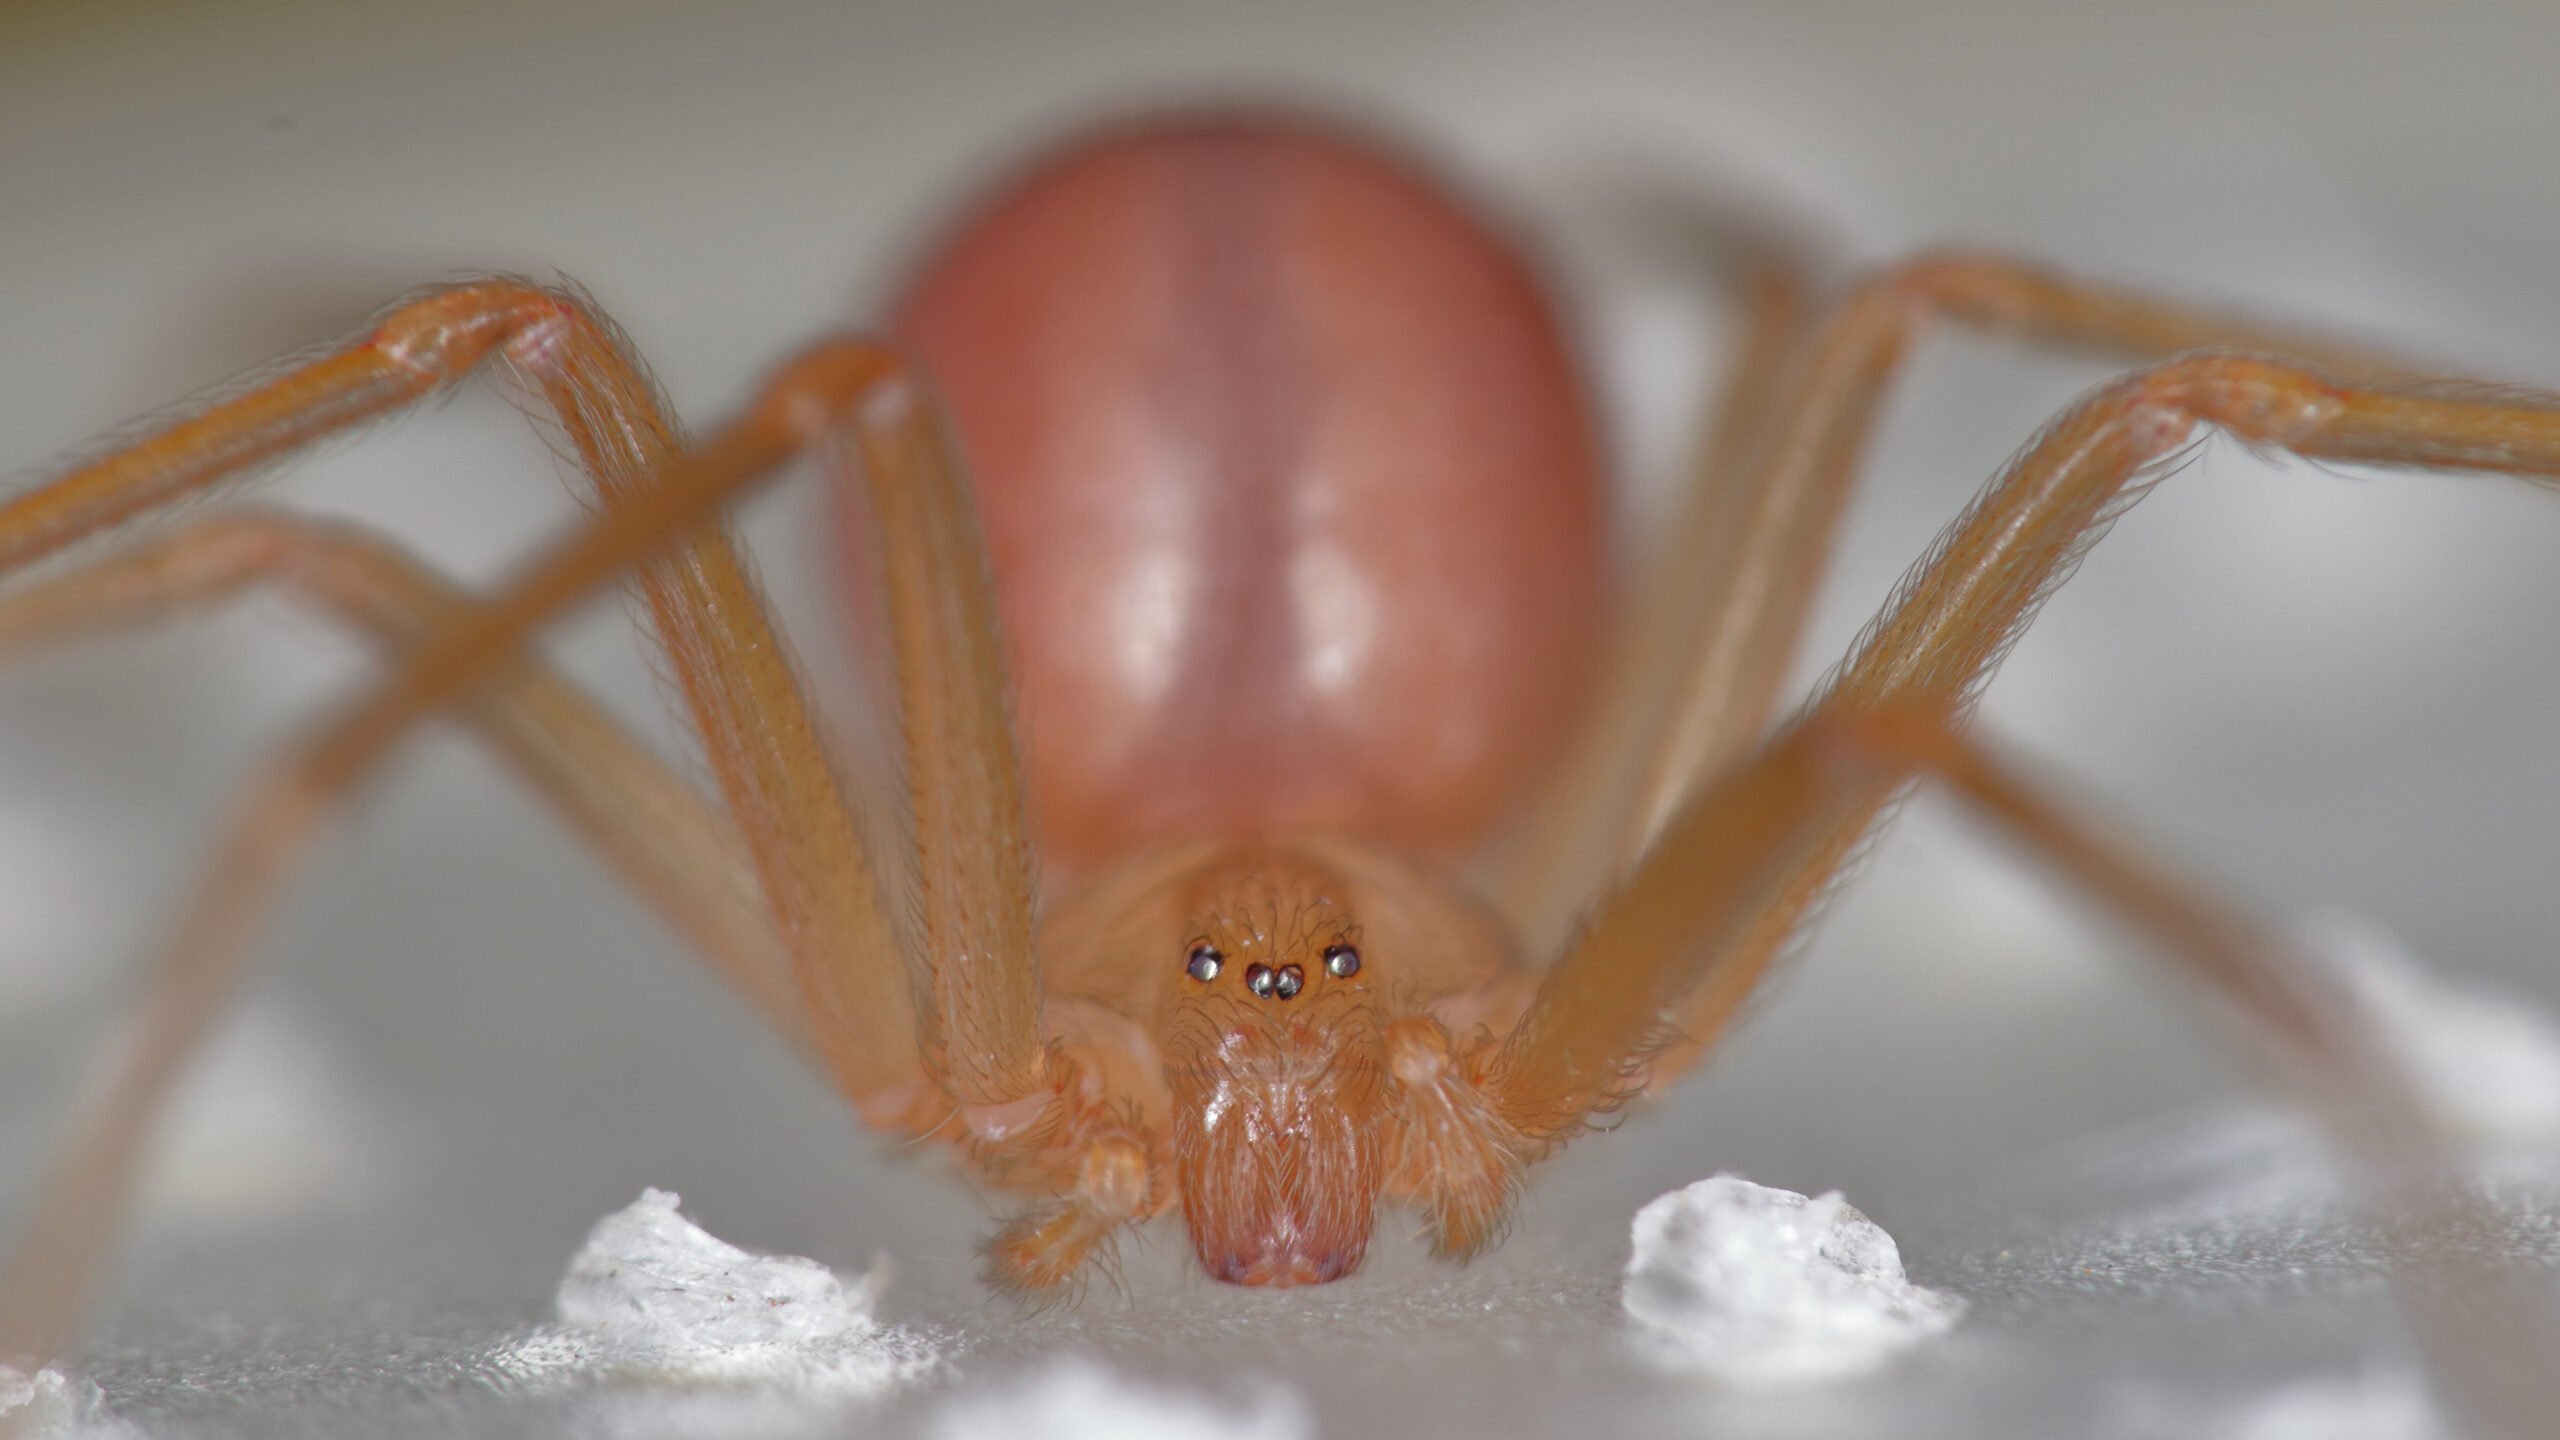 Swelling Australian cities harbour ever bigger spiders